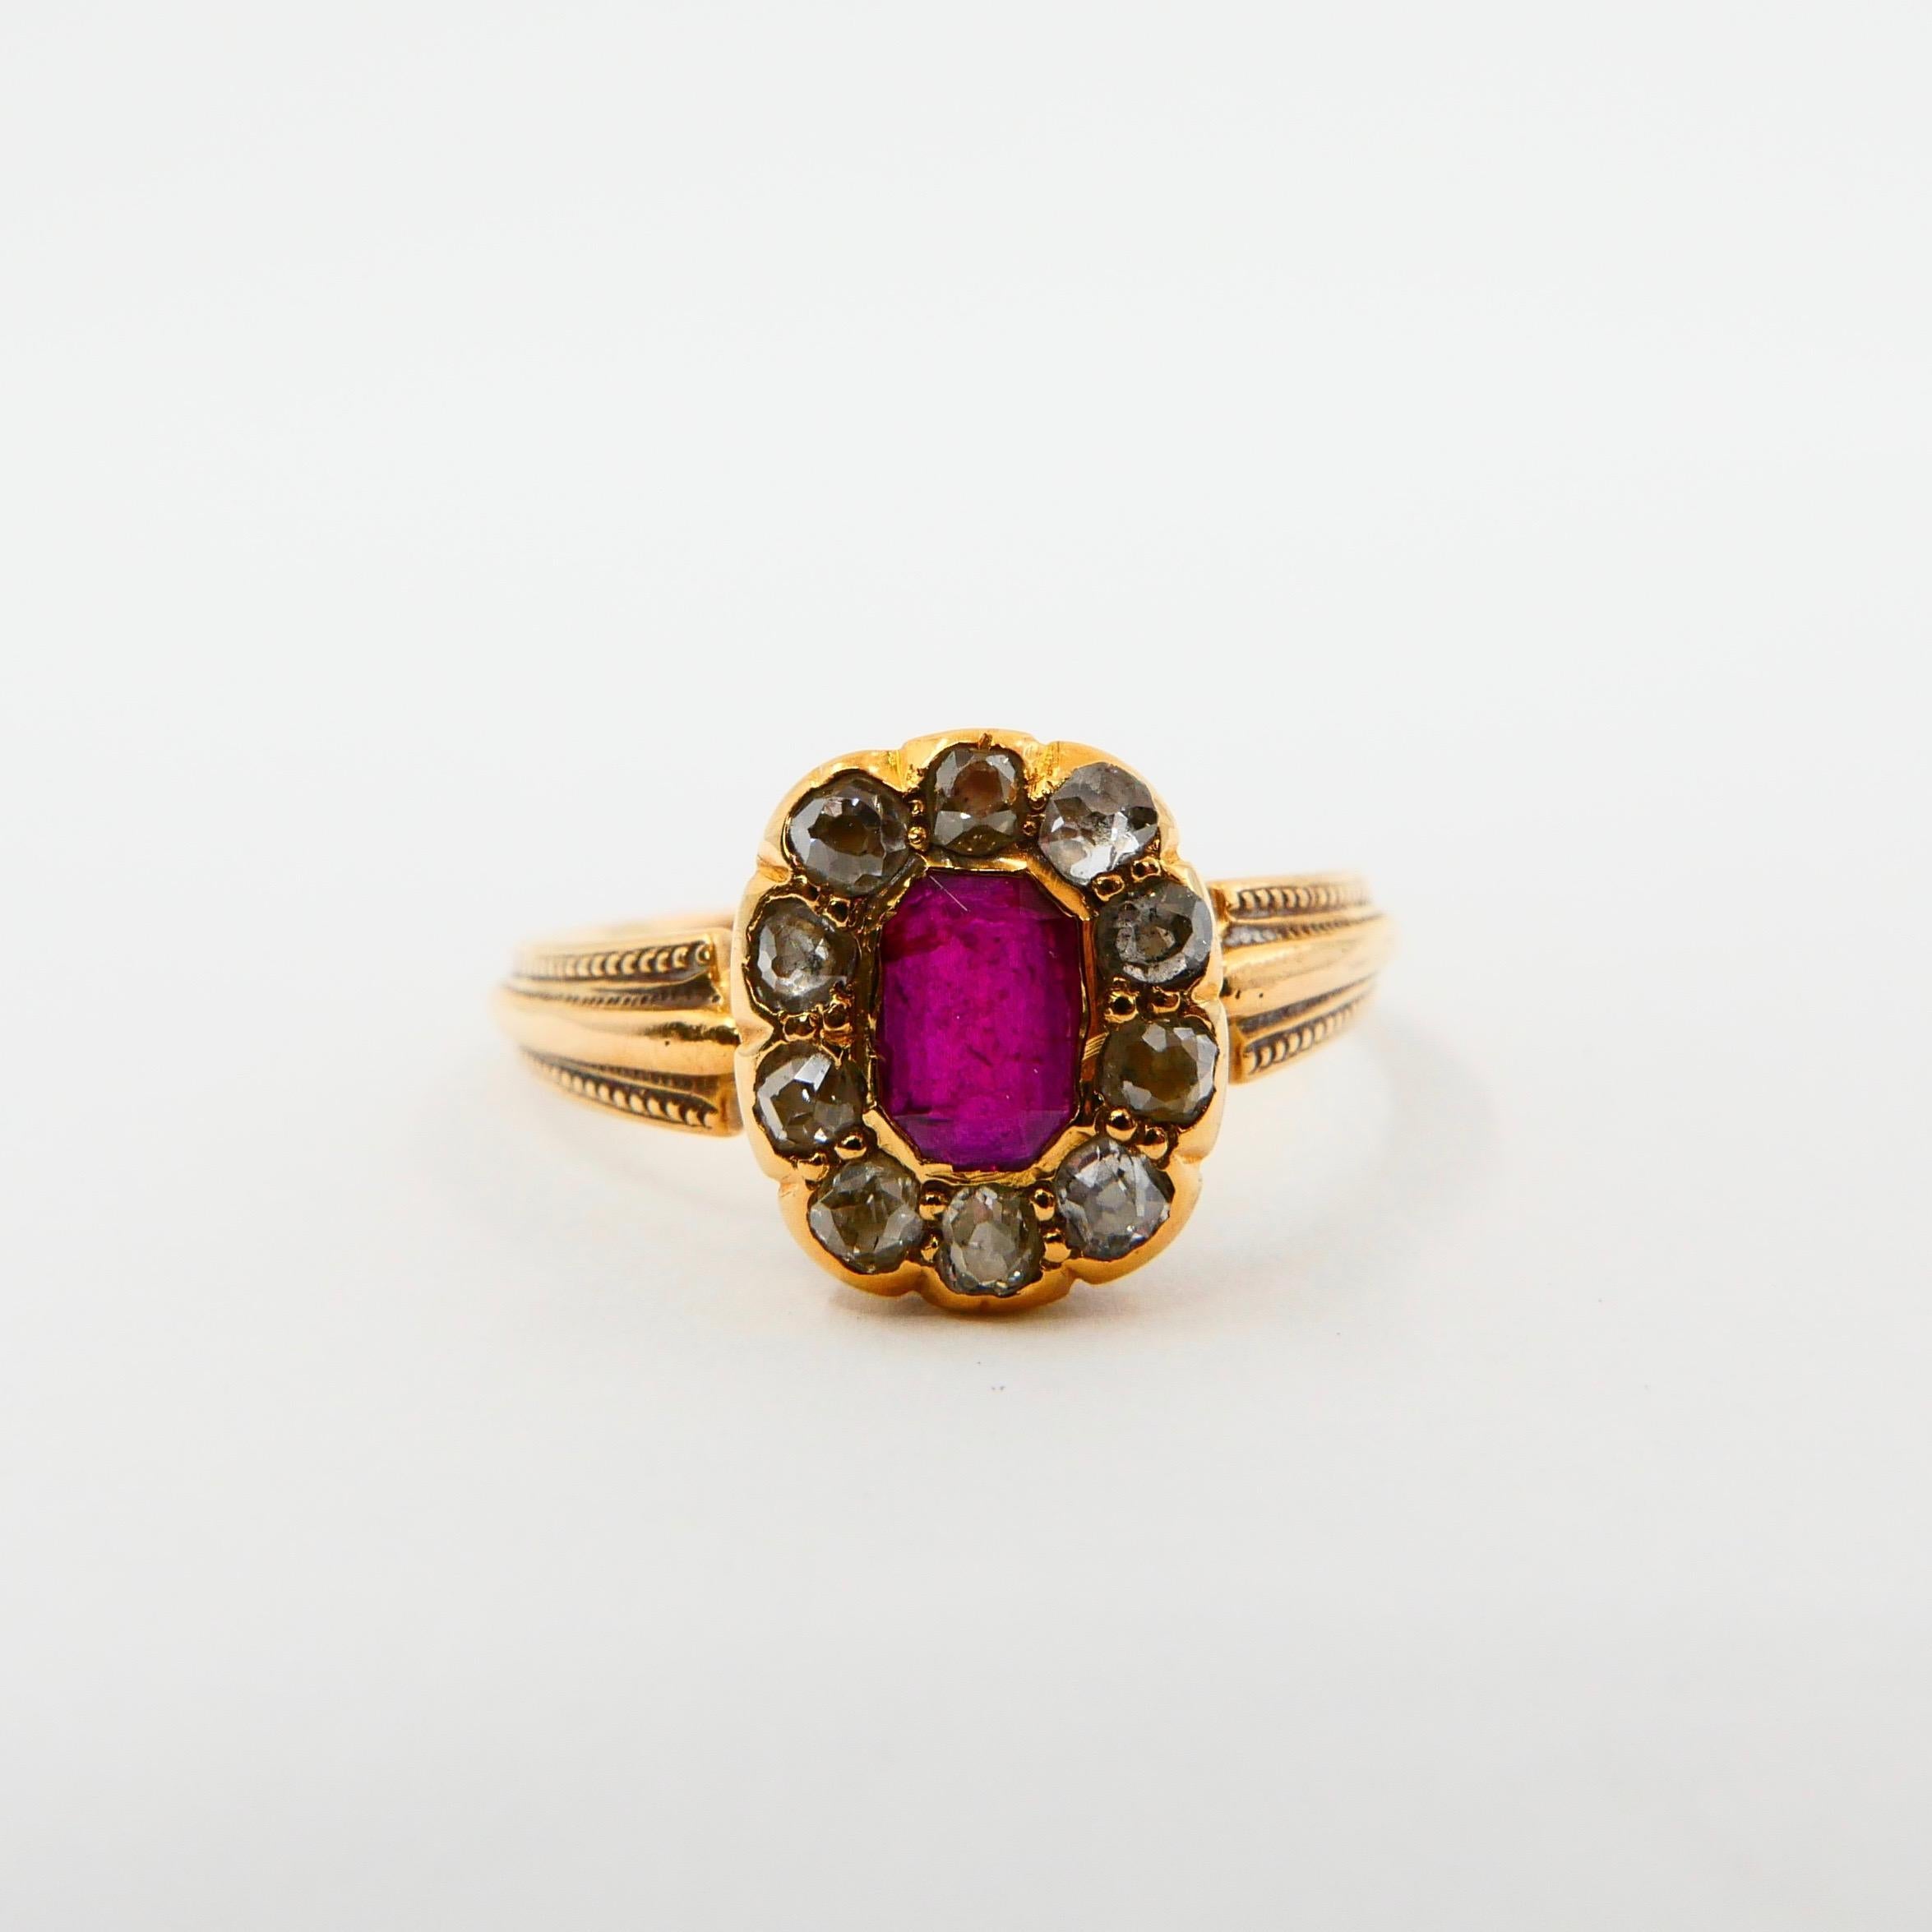 Vintage Burma Ruby and Old Mine Cut Diamond Ring, 18 Karat Yellow Gold 2